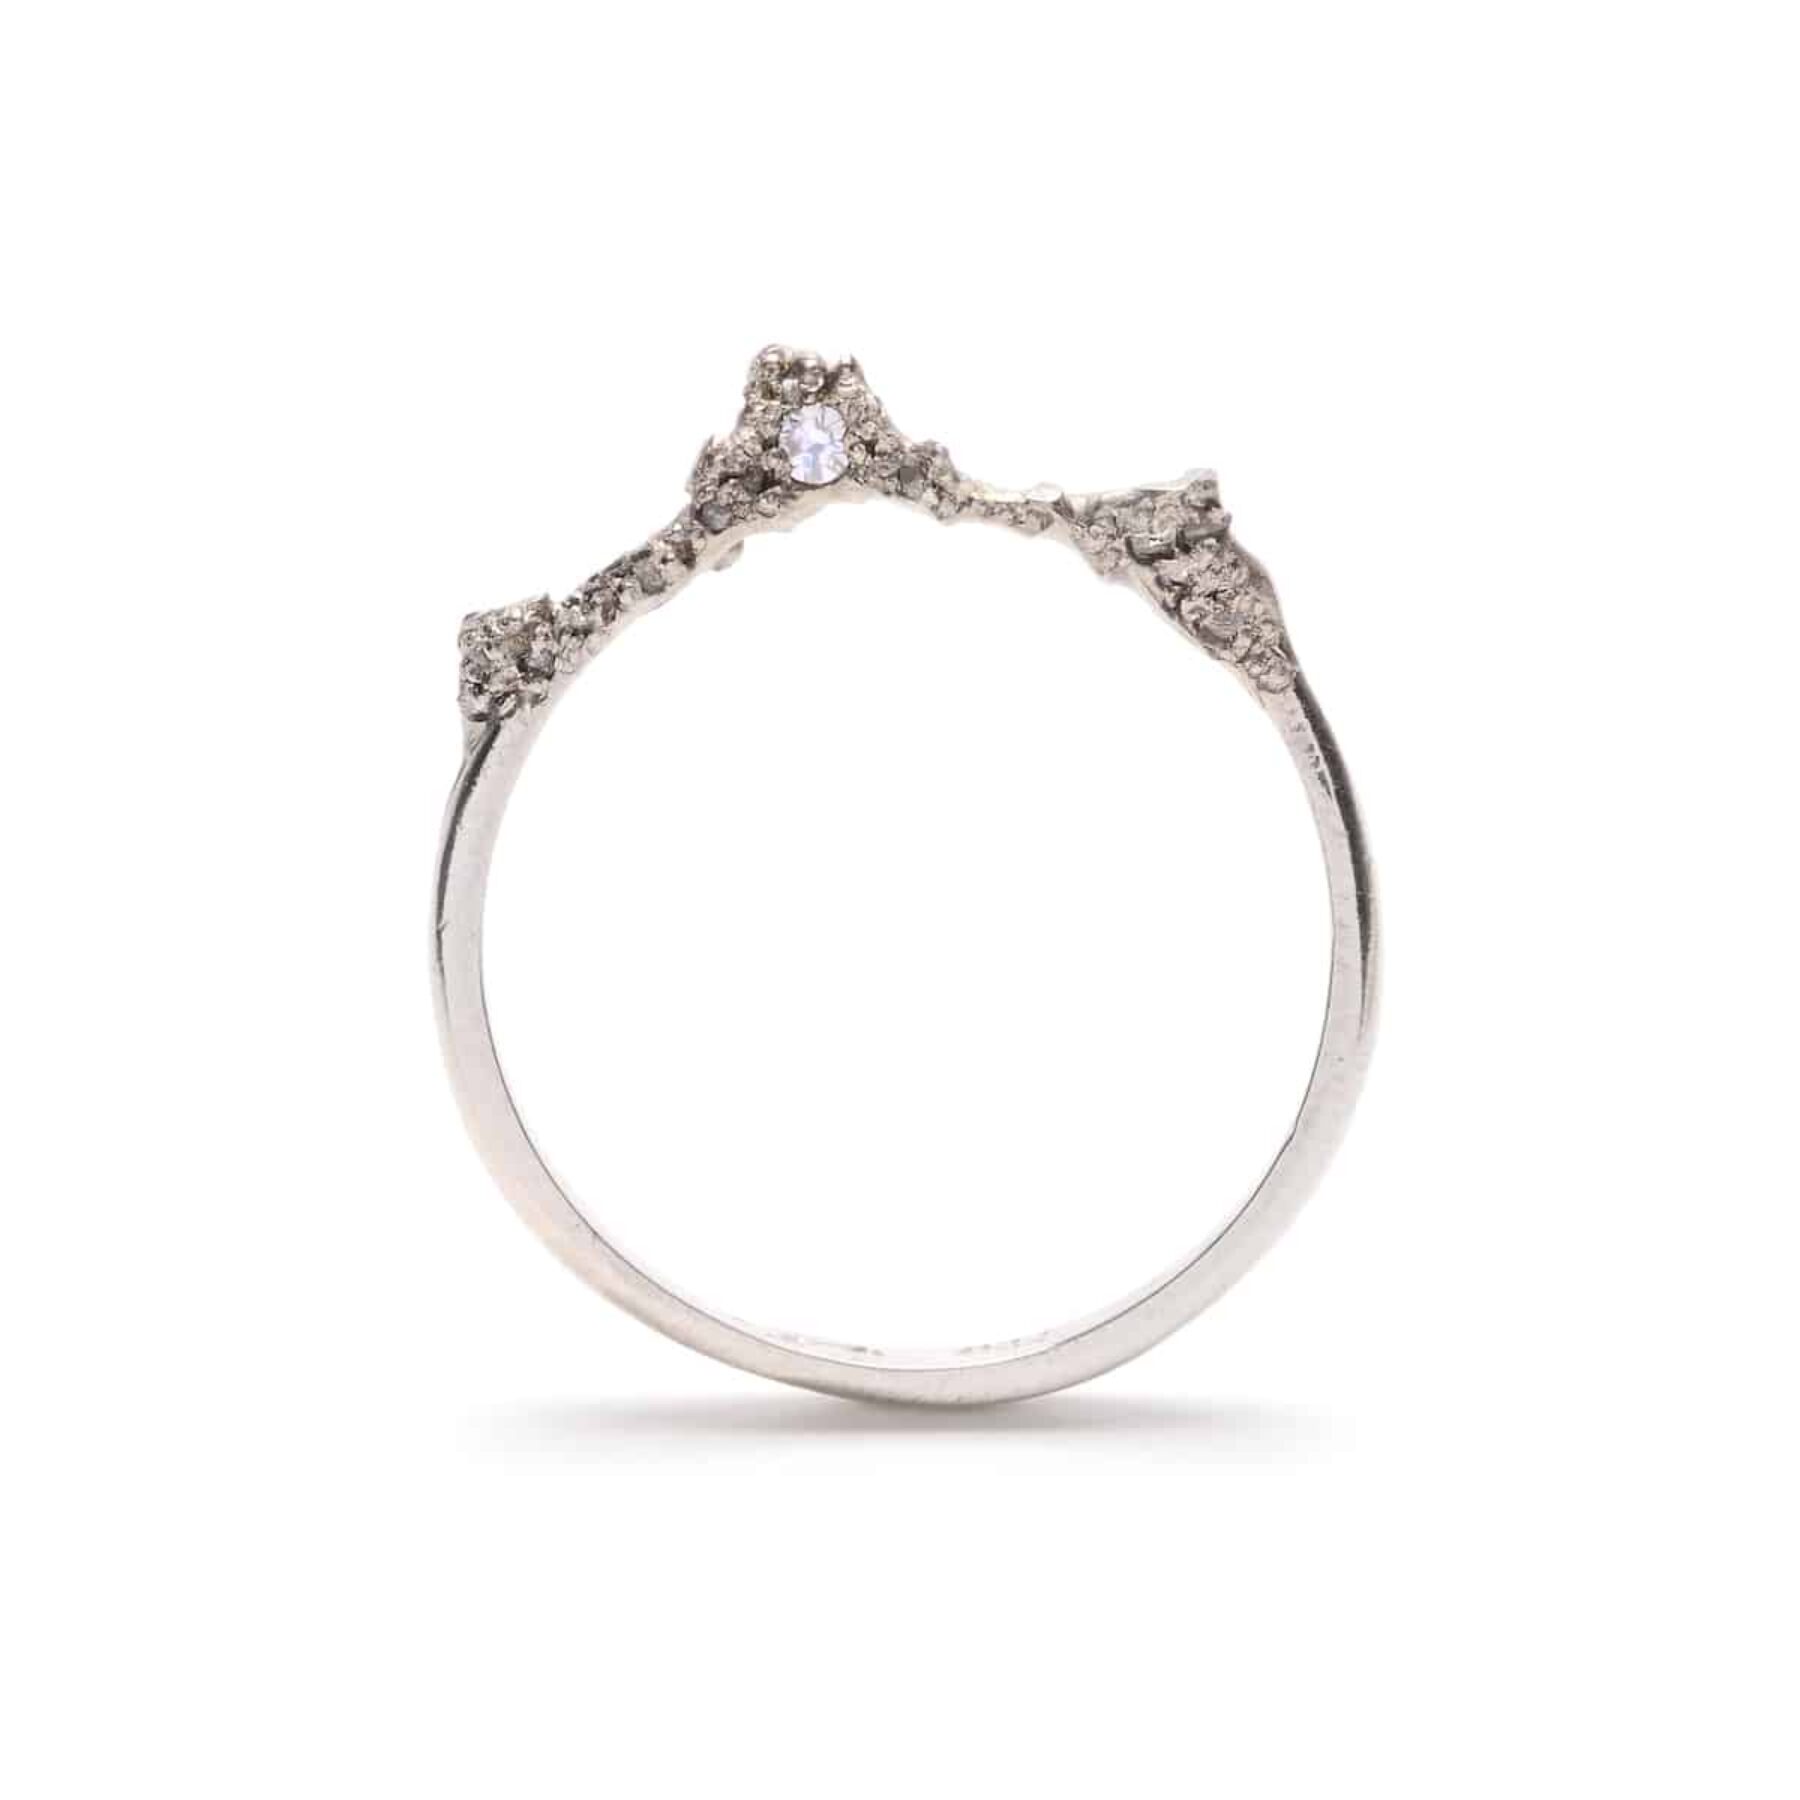 Julia DeVille wedding ring